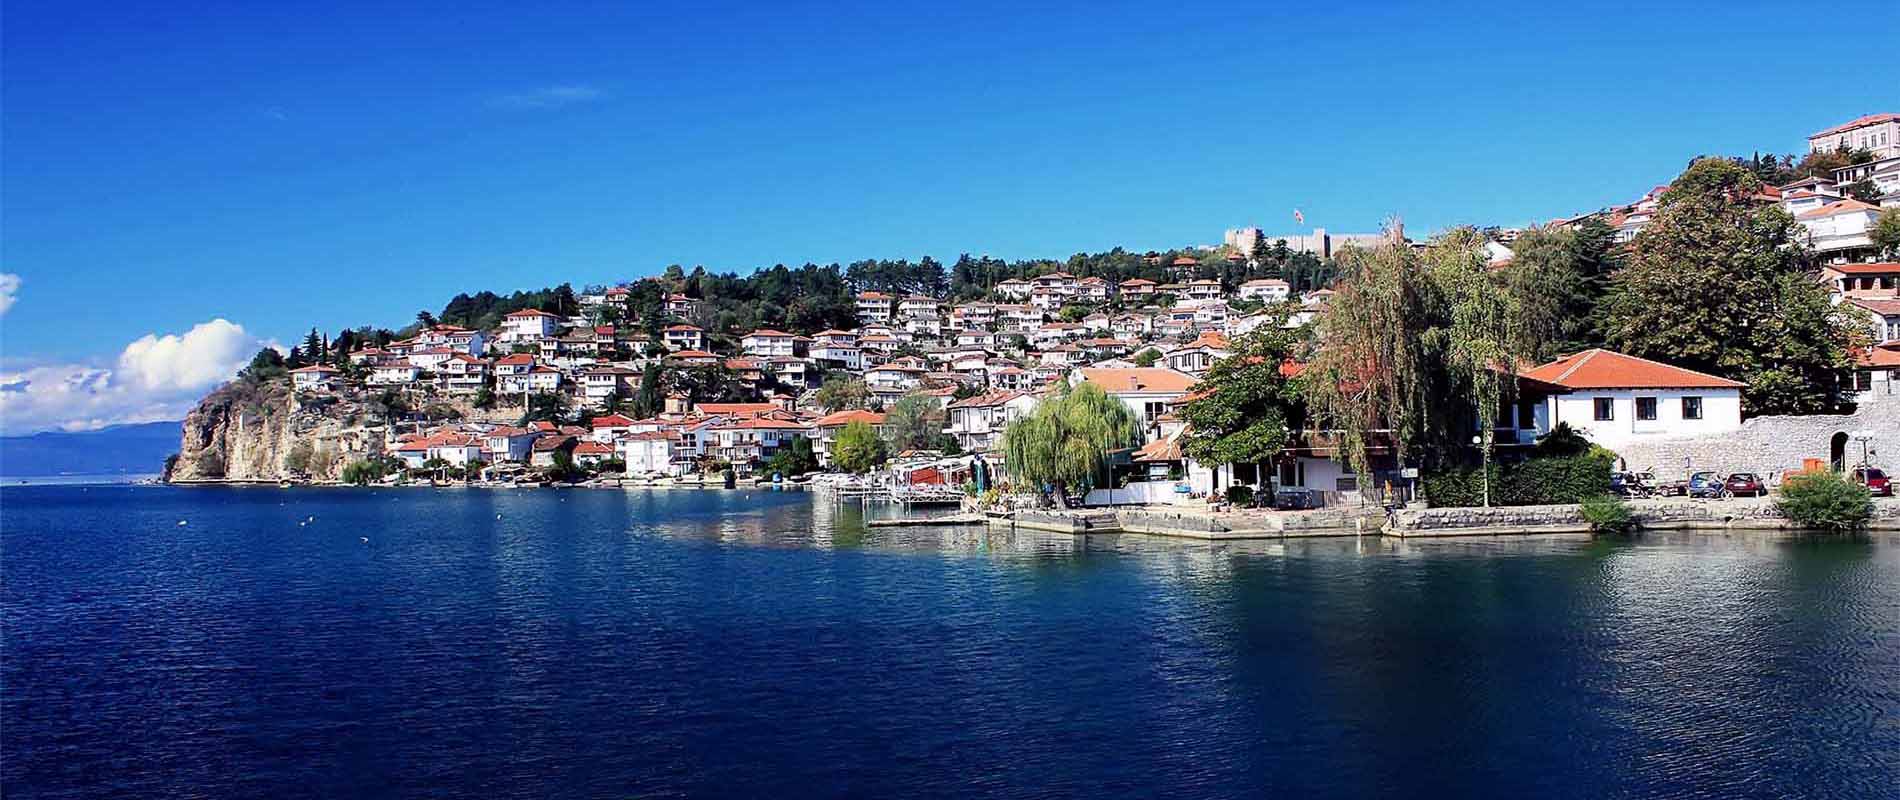 Lake and city of Ohrid